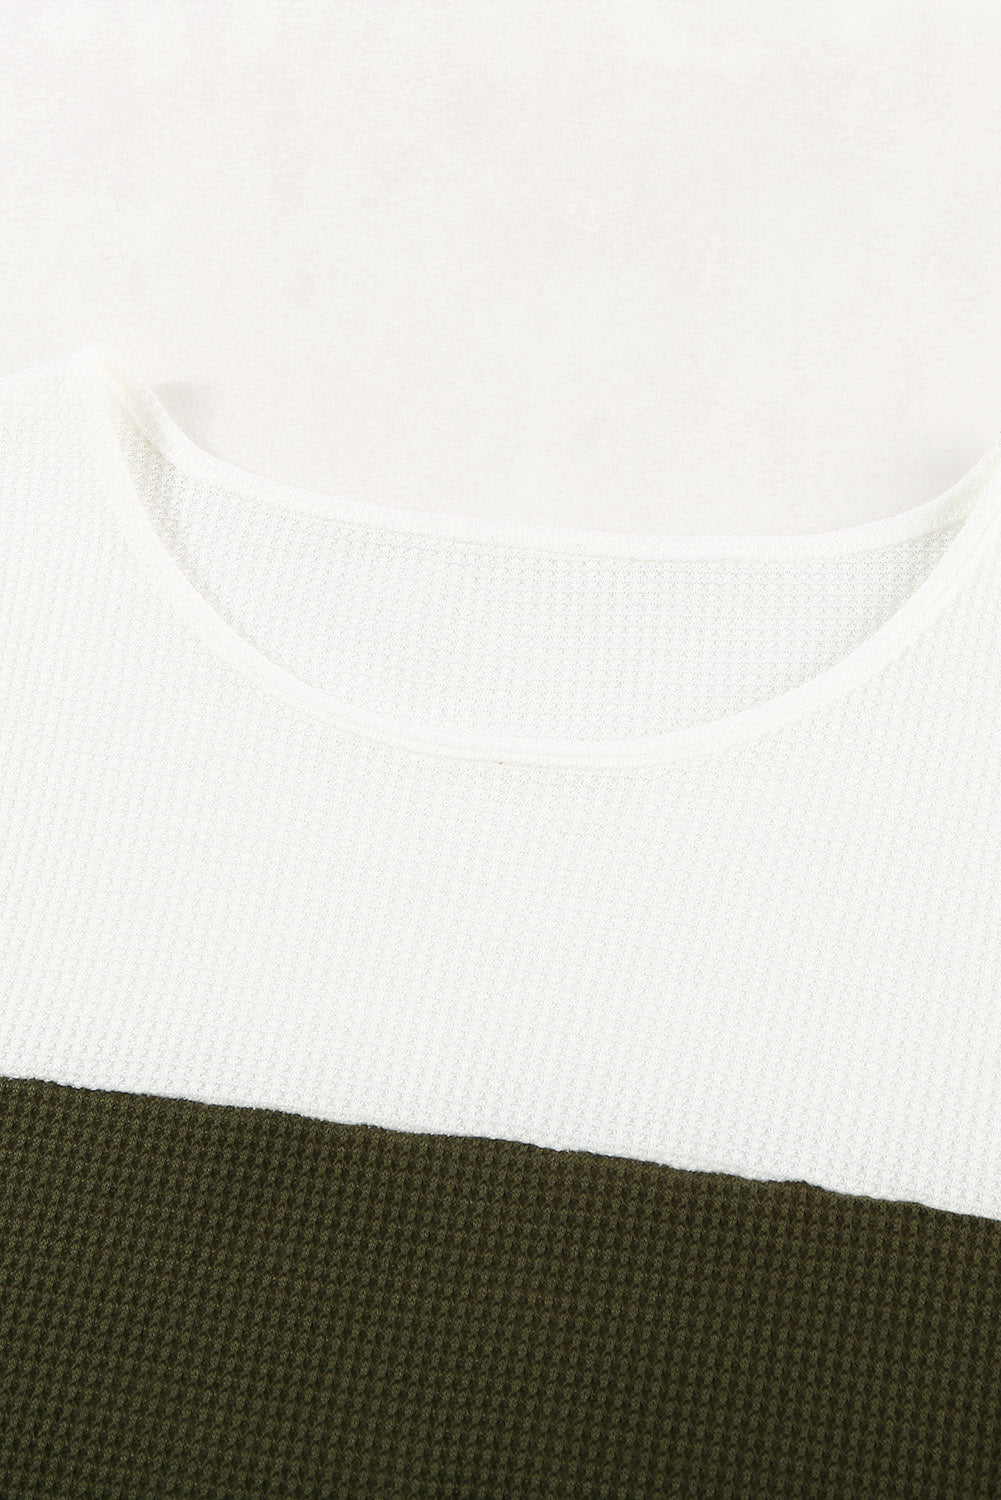 Green Stylish Colorblock Splicing Stripes Top Long Sleeve Tops JT's Designer Fashion